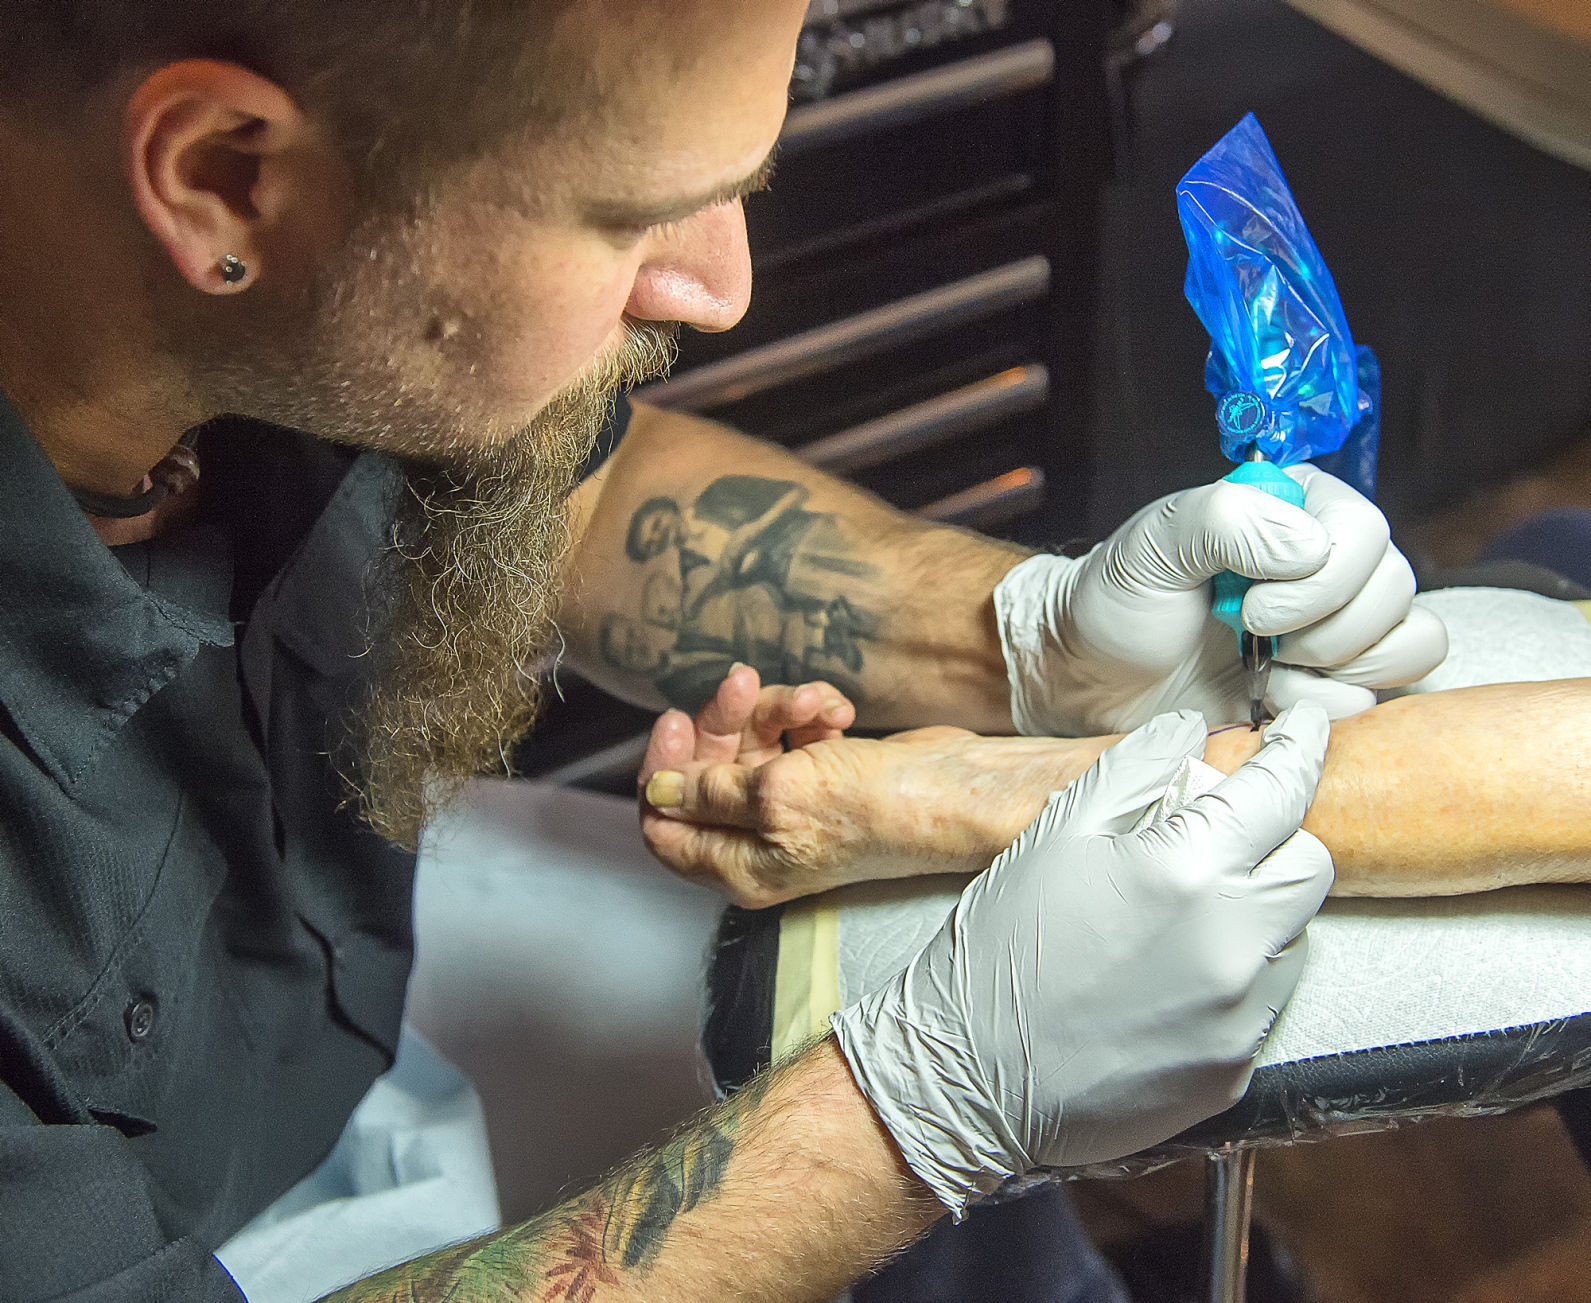 Photos: Apple tattoo helps raise addiction and mental health awareness